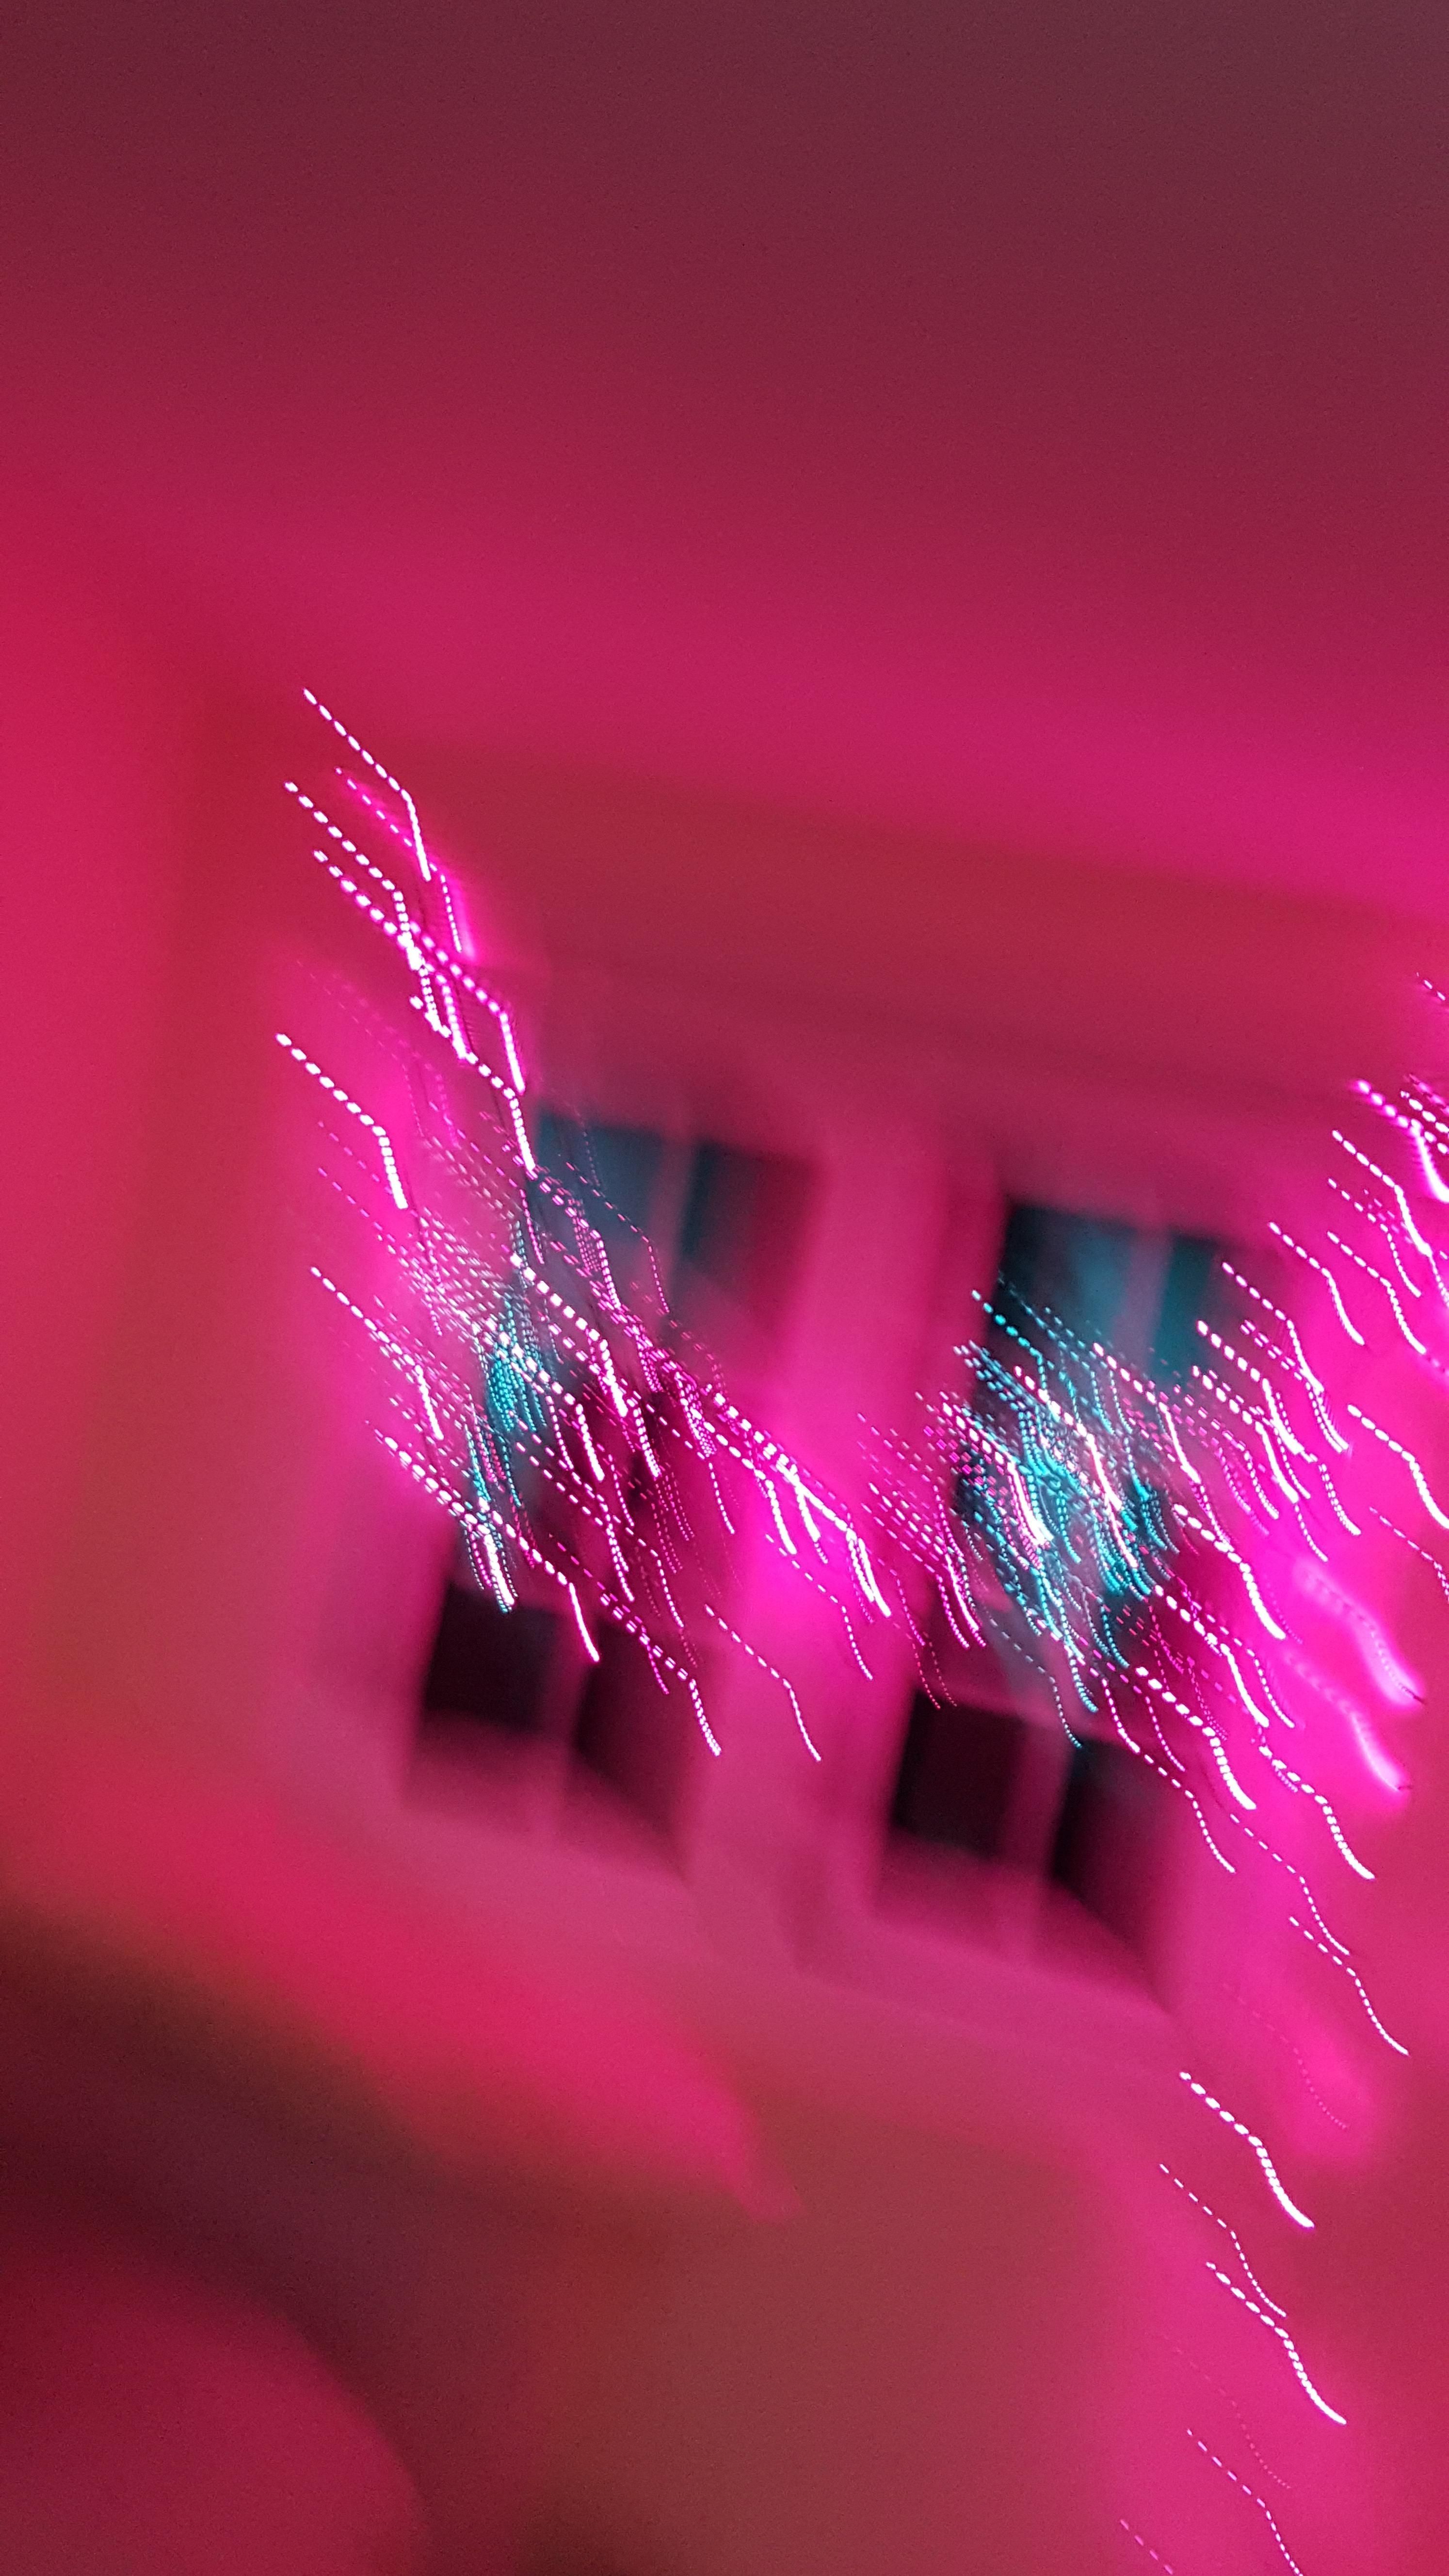 Blurry bedroom fairy lights #vaporwave #glitch